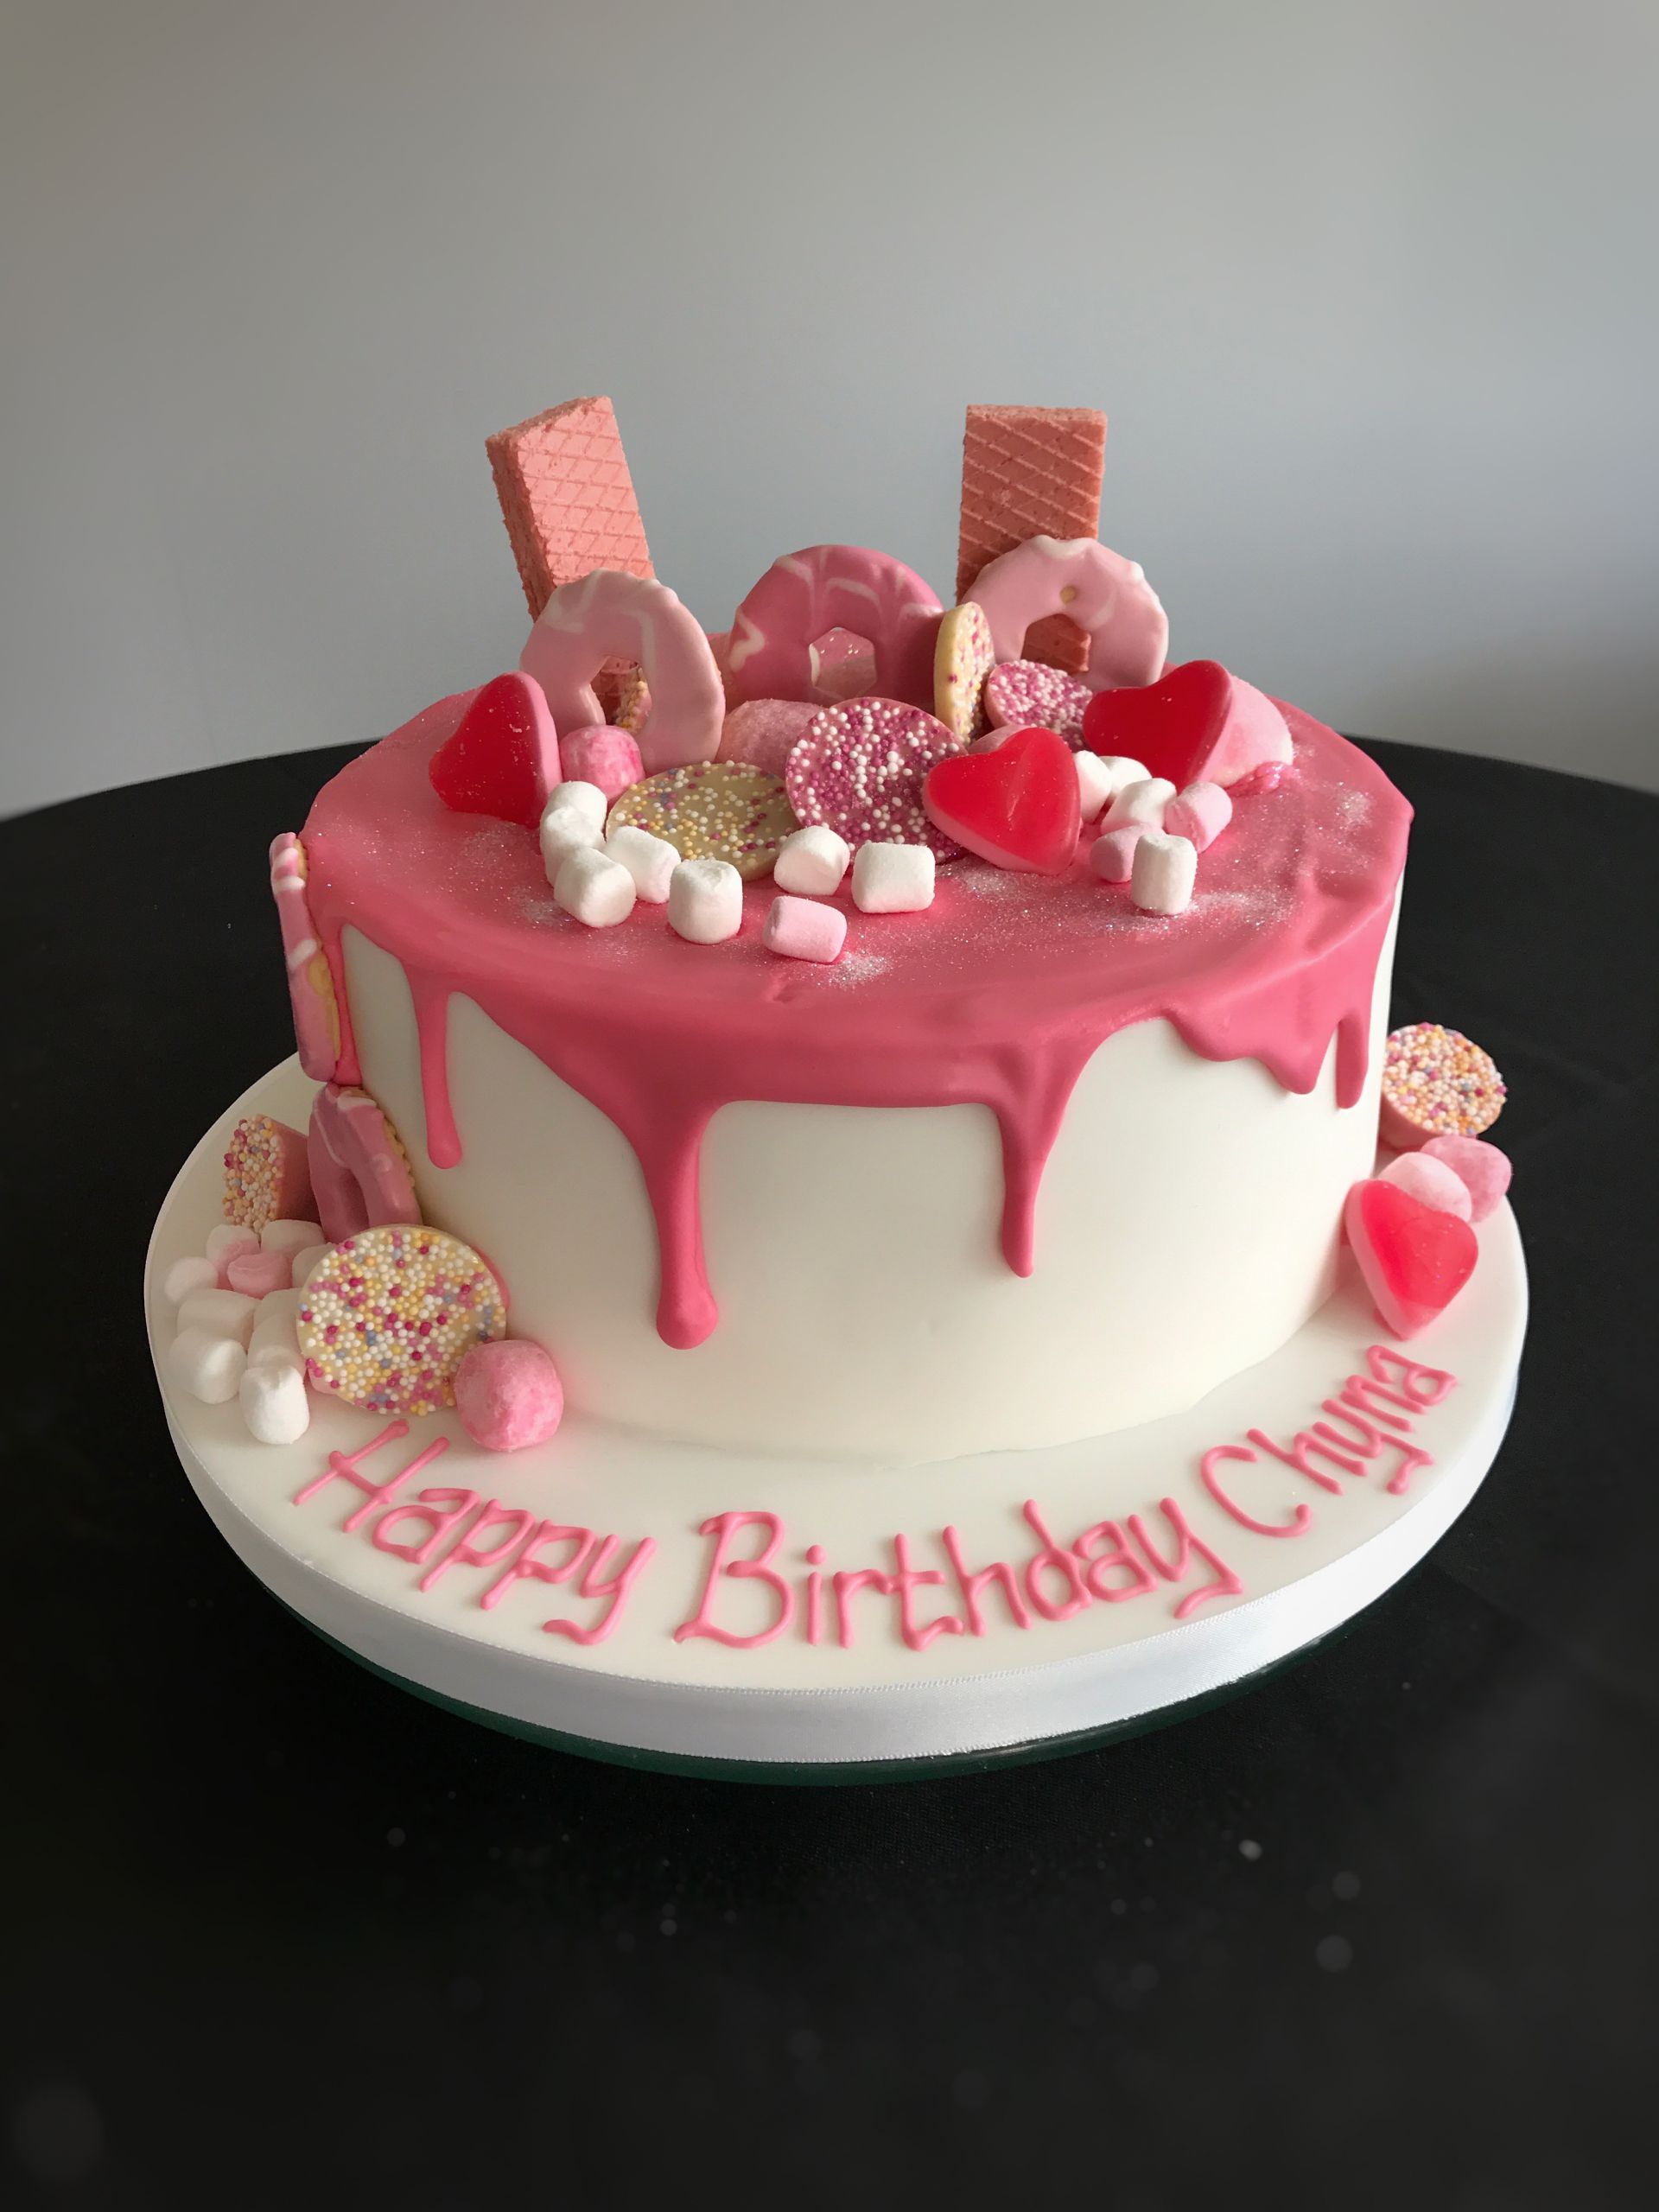 Pictures Of Birthday Cakes
 Female Birthday Cakes Bedfordshire Hertfordshire London